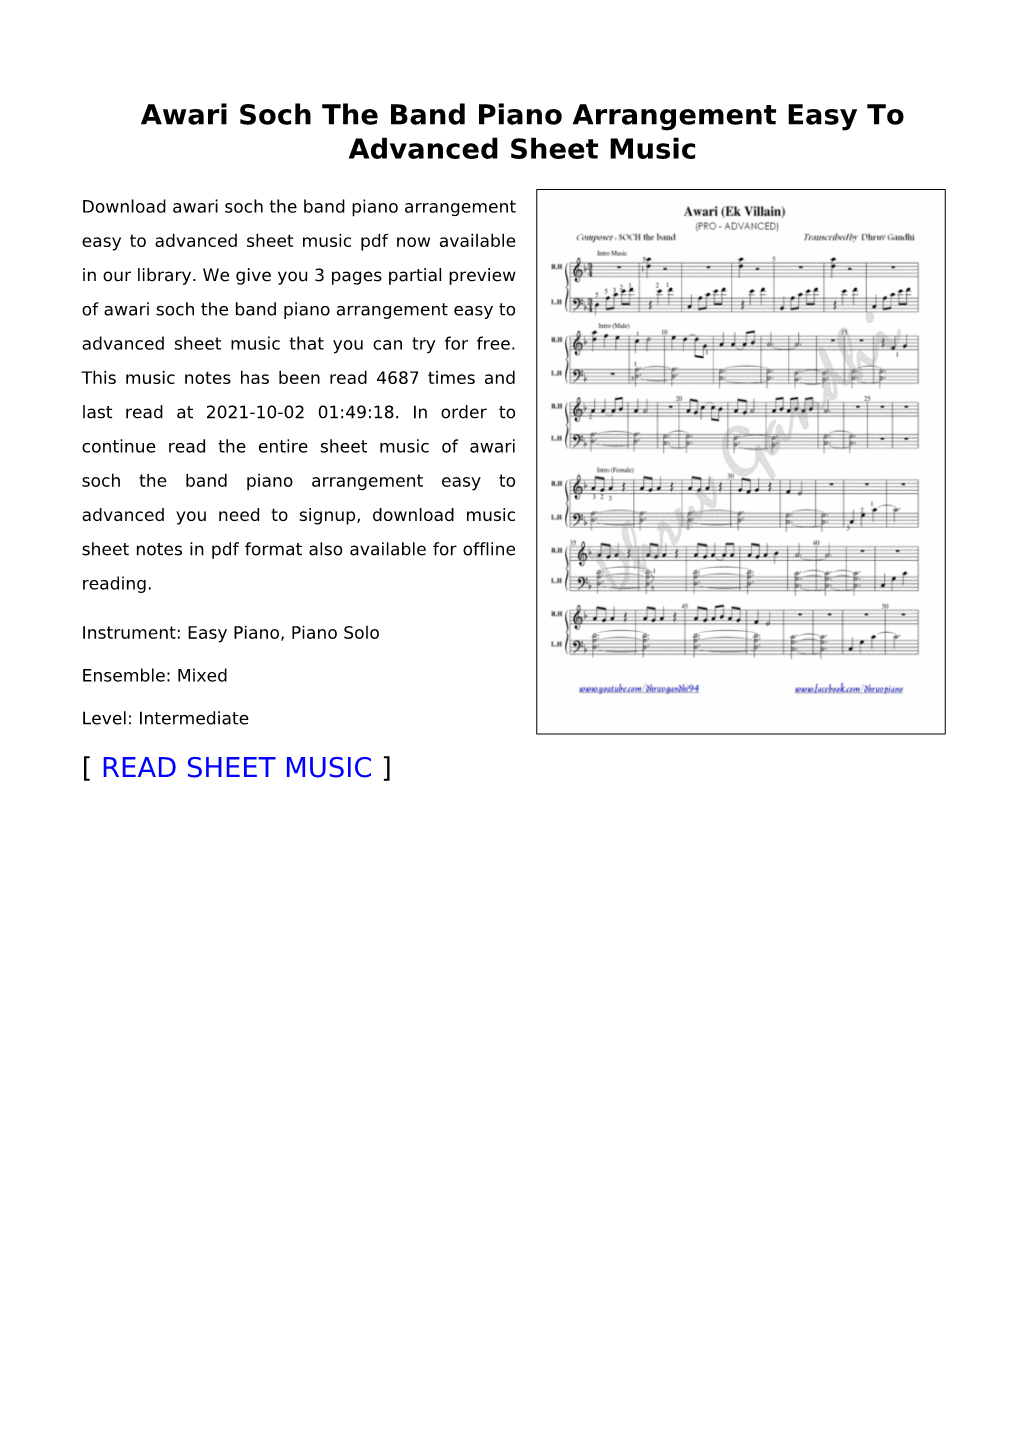 Awari Soch the Band Piano Arrangement Easy to Advanced Sheet Music